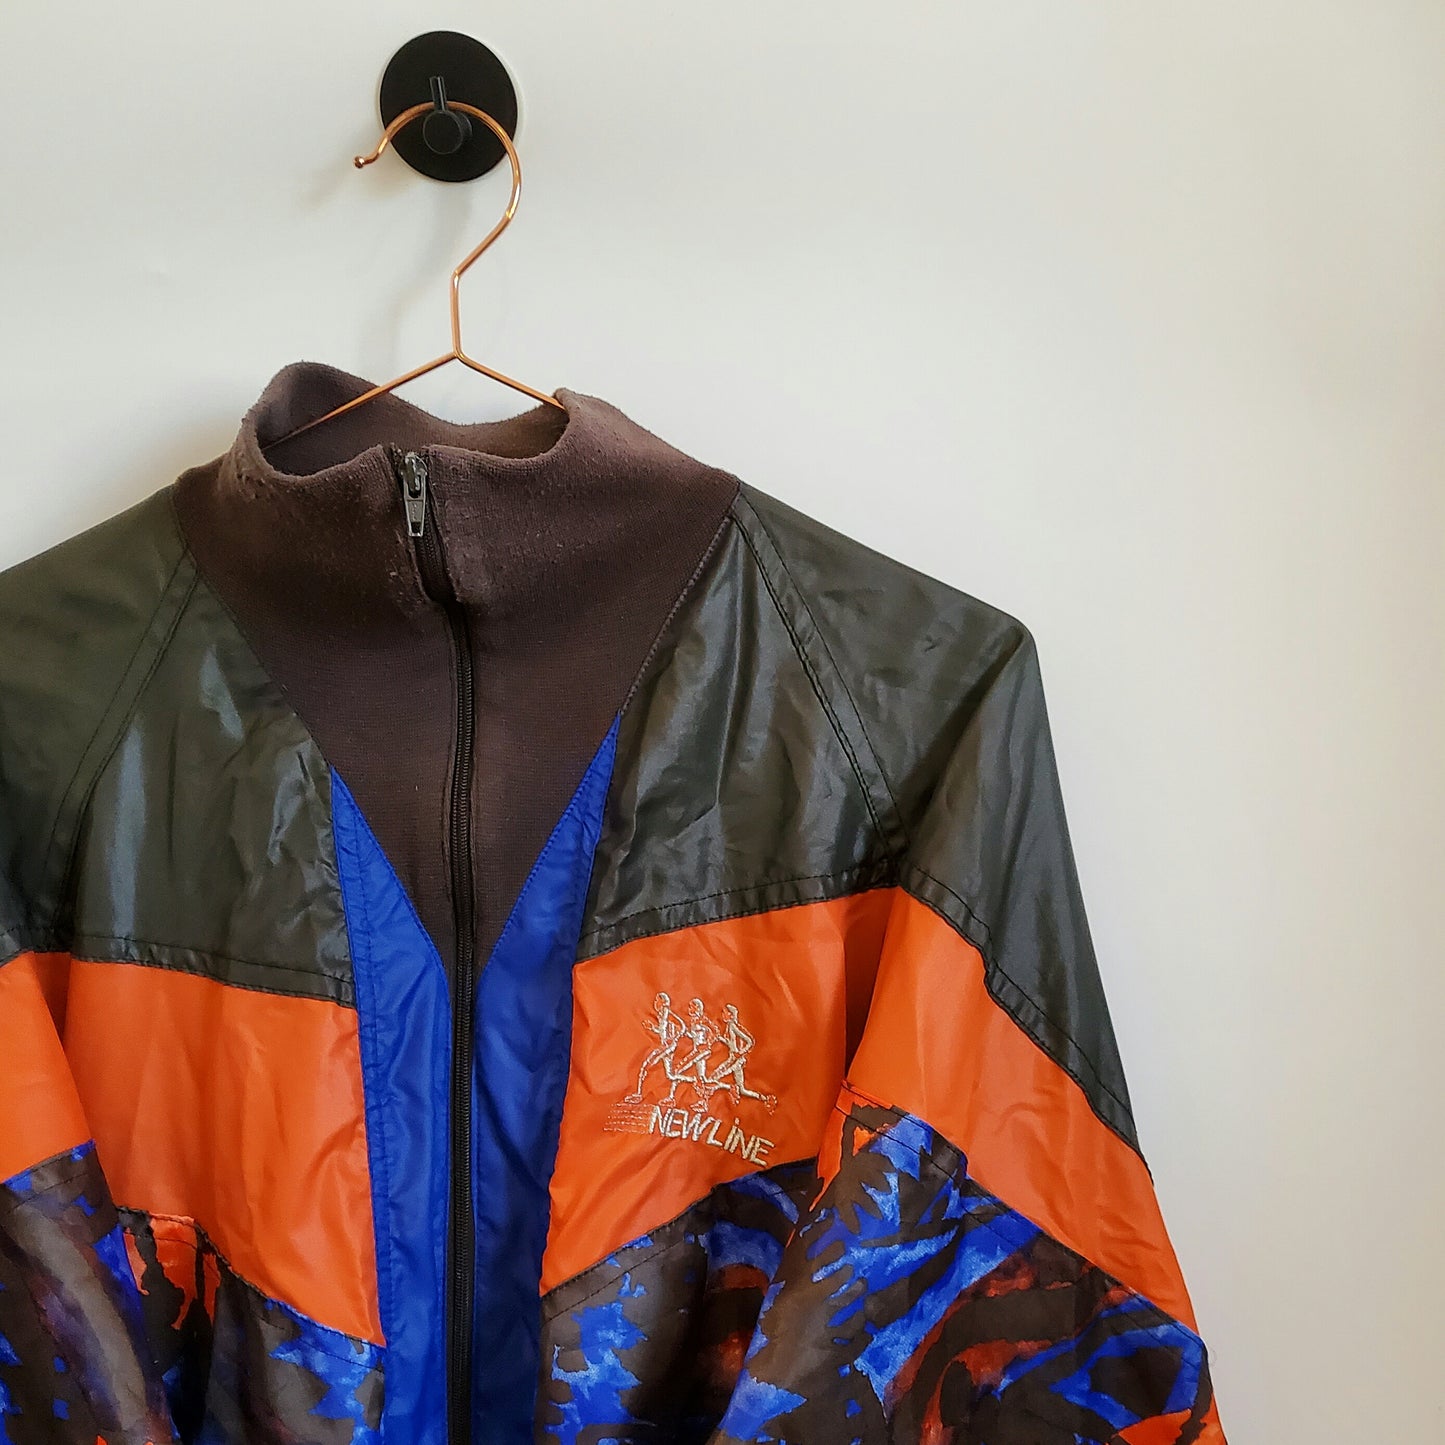 Vintage 90s Crazy Festival Windbreaker Jacket | Size XL